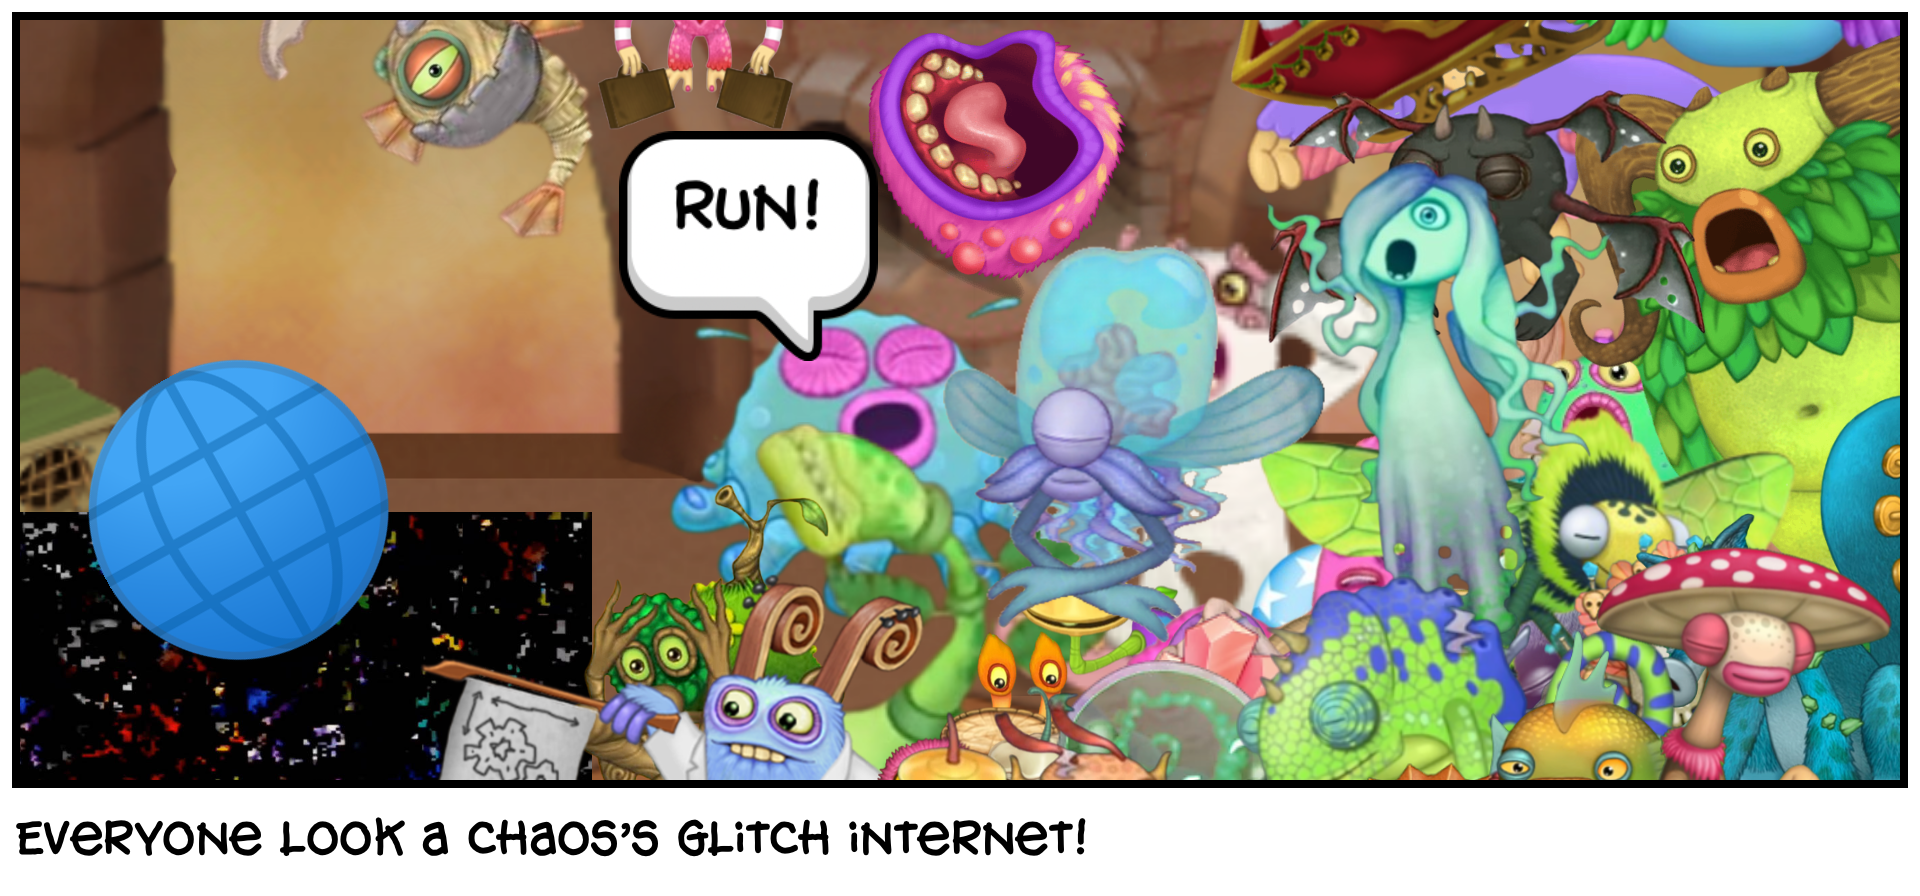 Everyone look a chaos’s glitch internet!